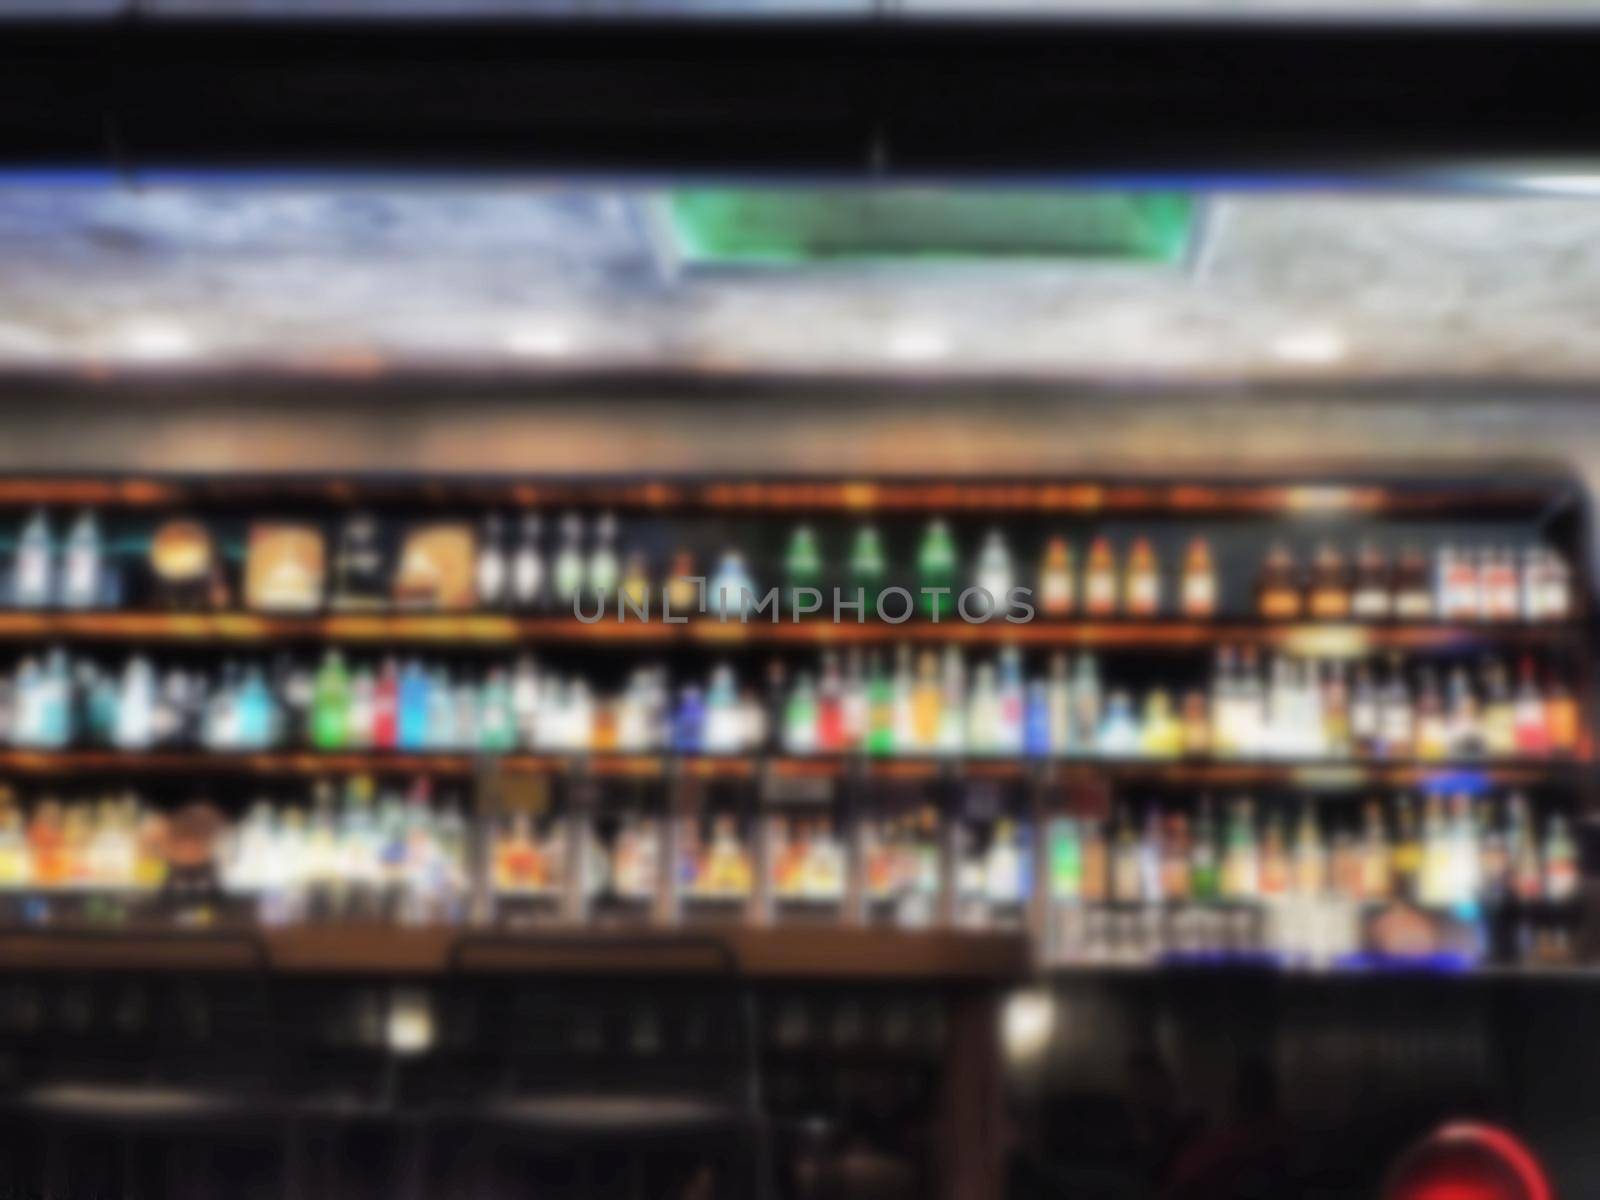 Bar counter and wide liquor bottles shelves defocused bokeh image by lemar